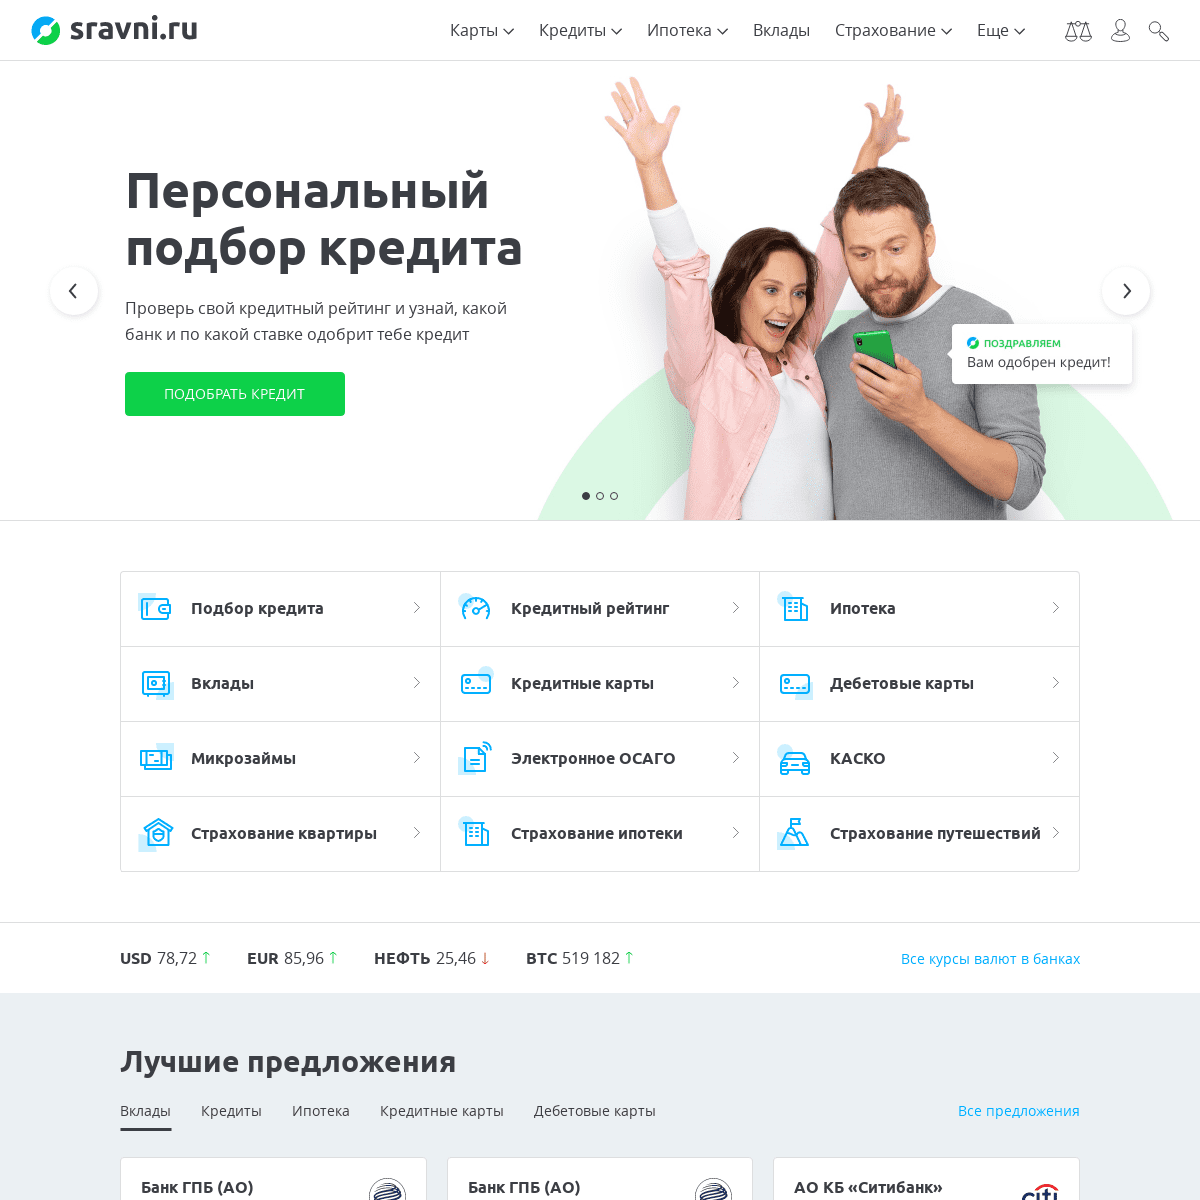 A complete backup of sravni.ru